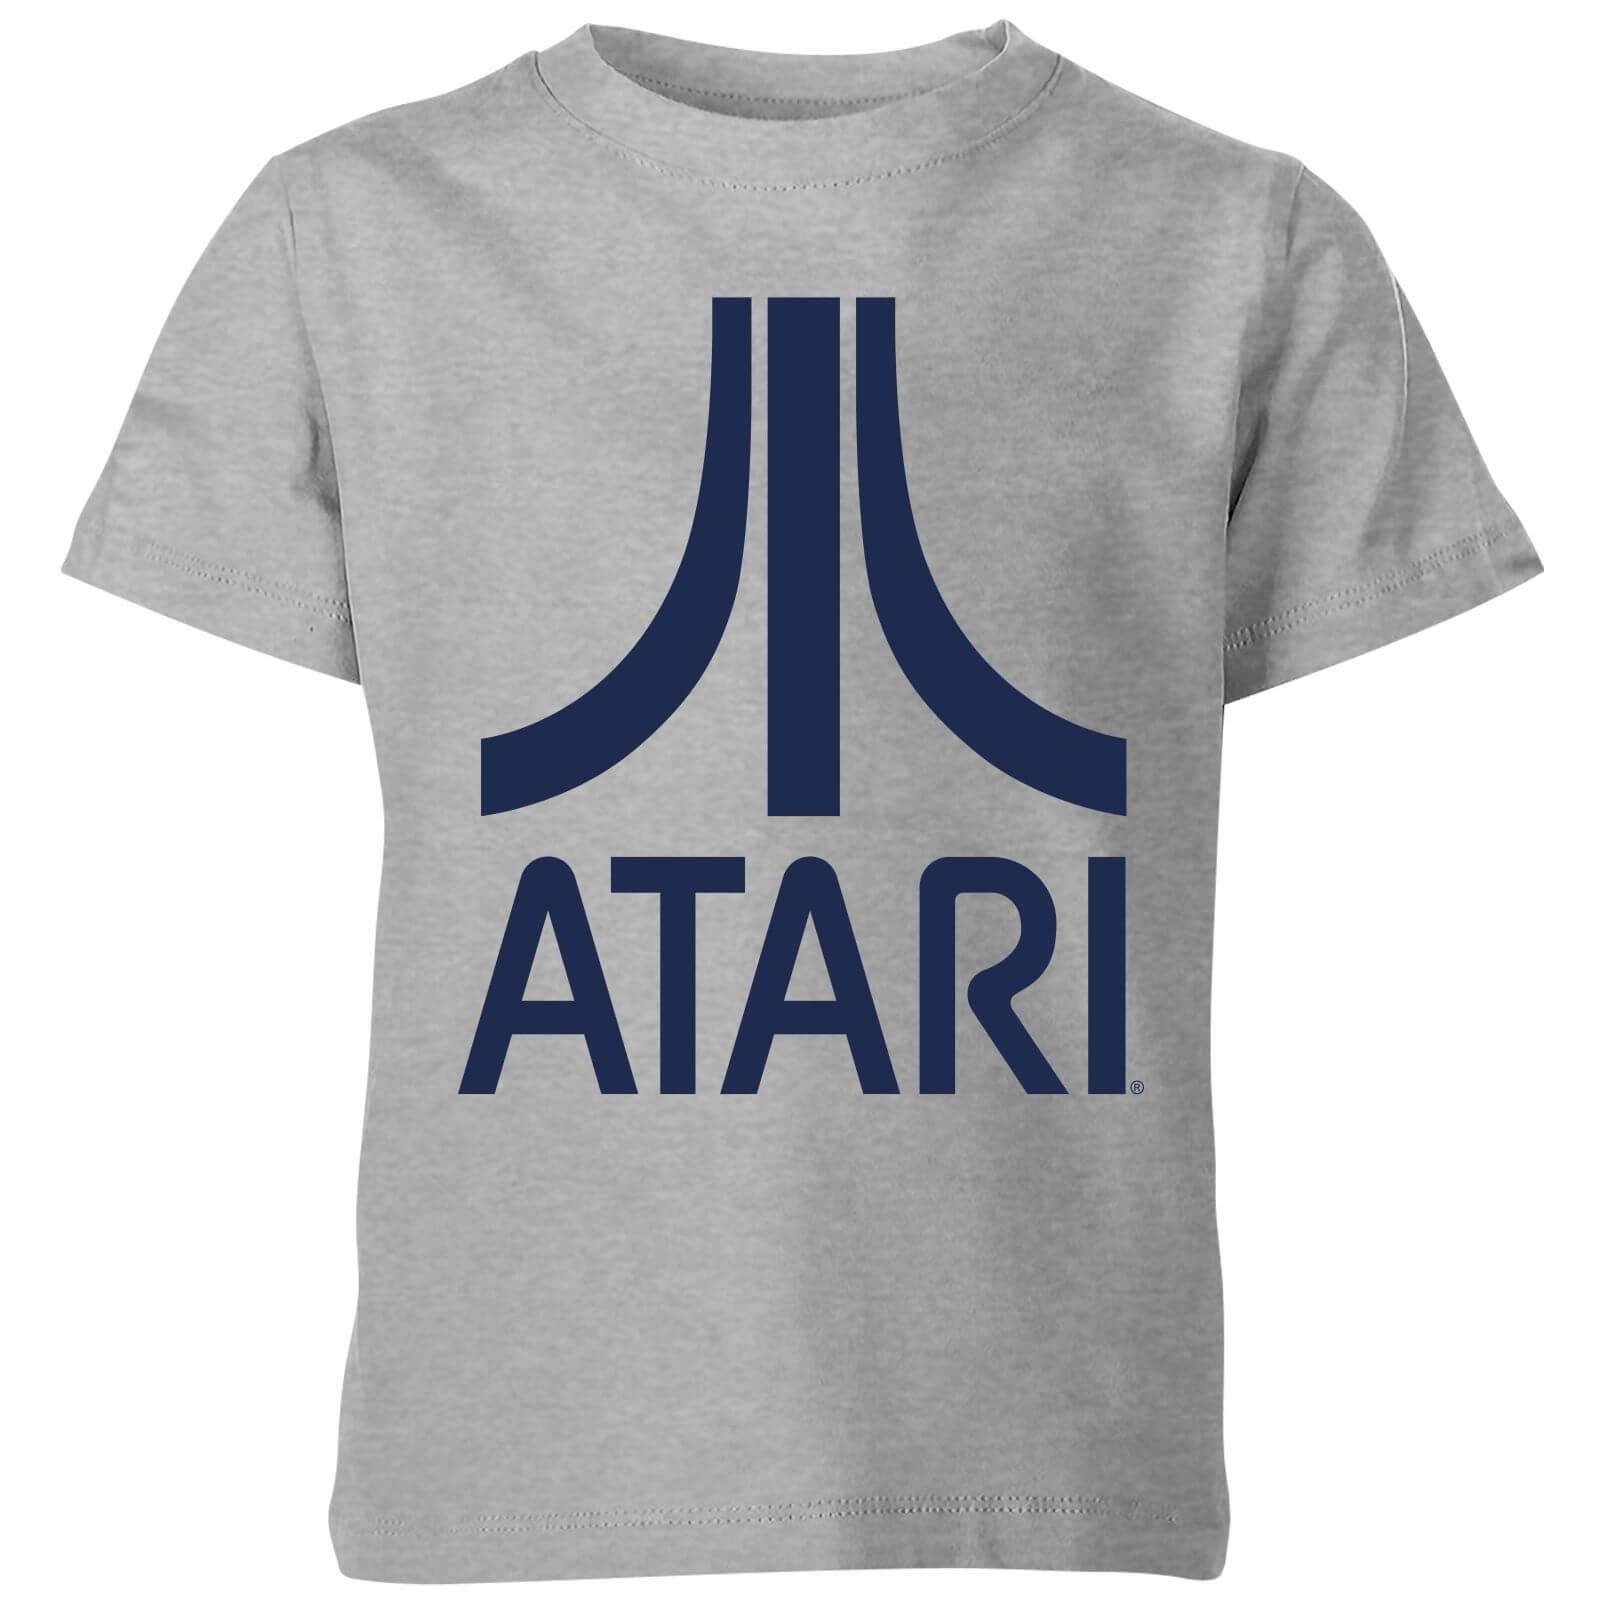 Atari Logo Kids' T-Shirt - Grey - 7-8 Years